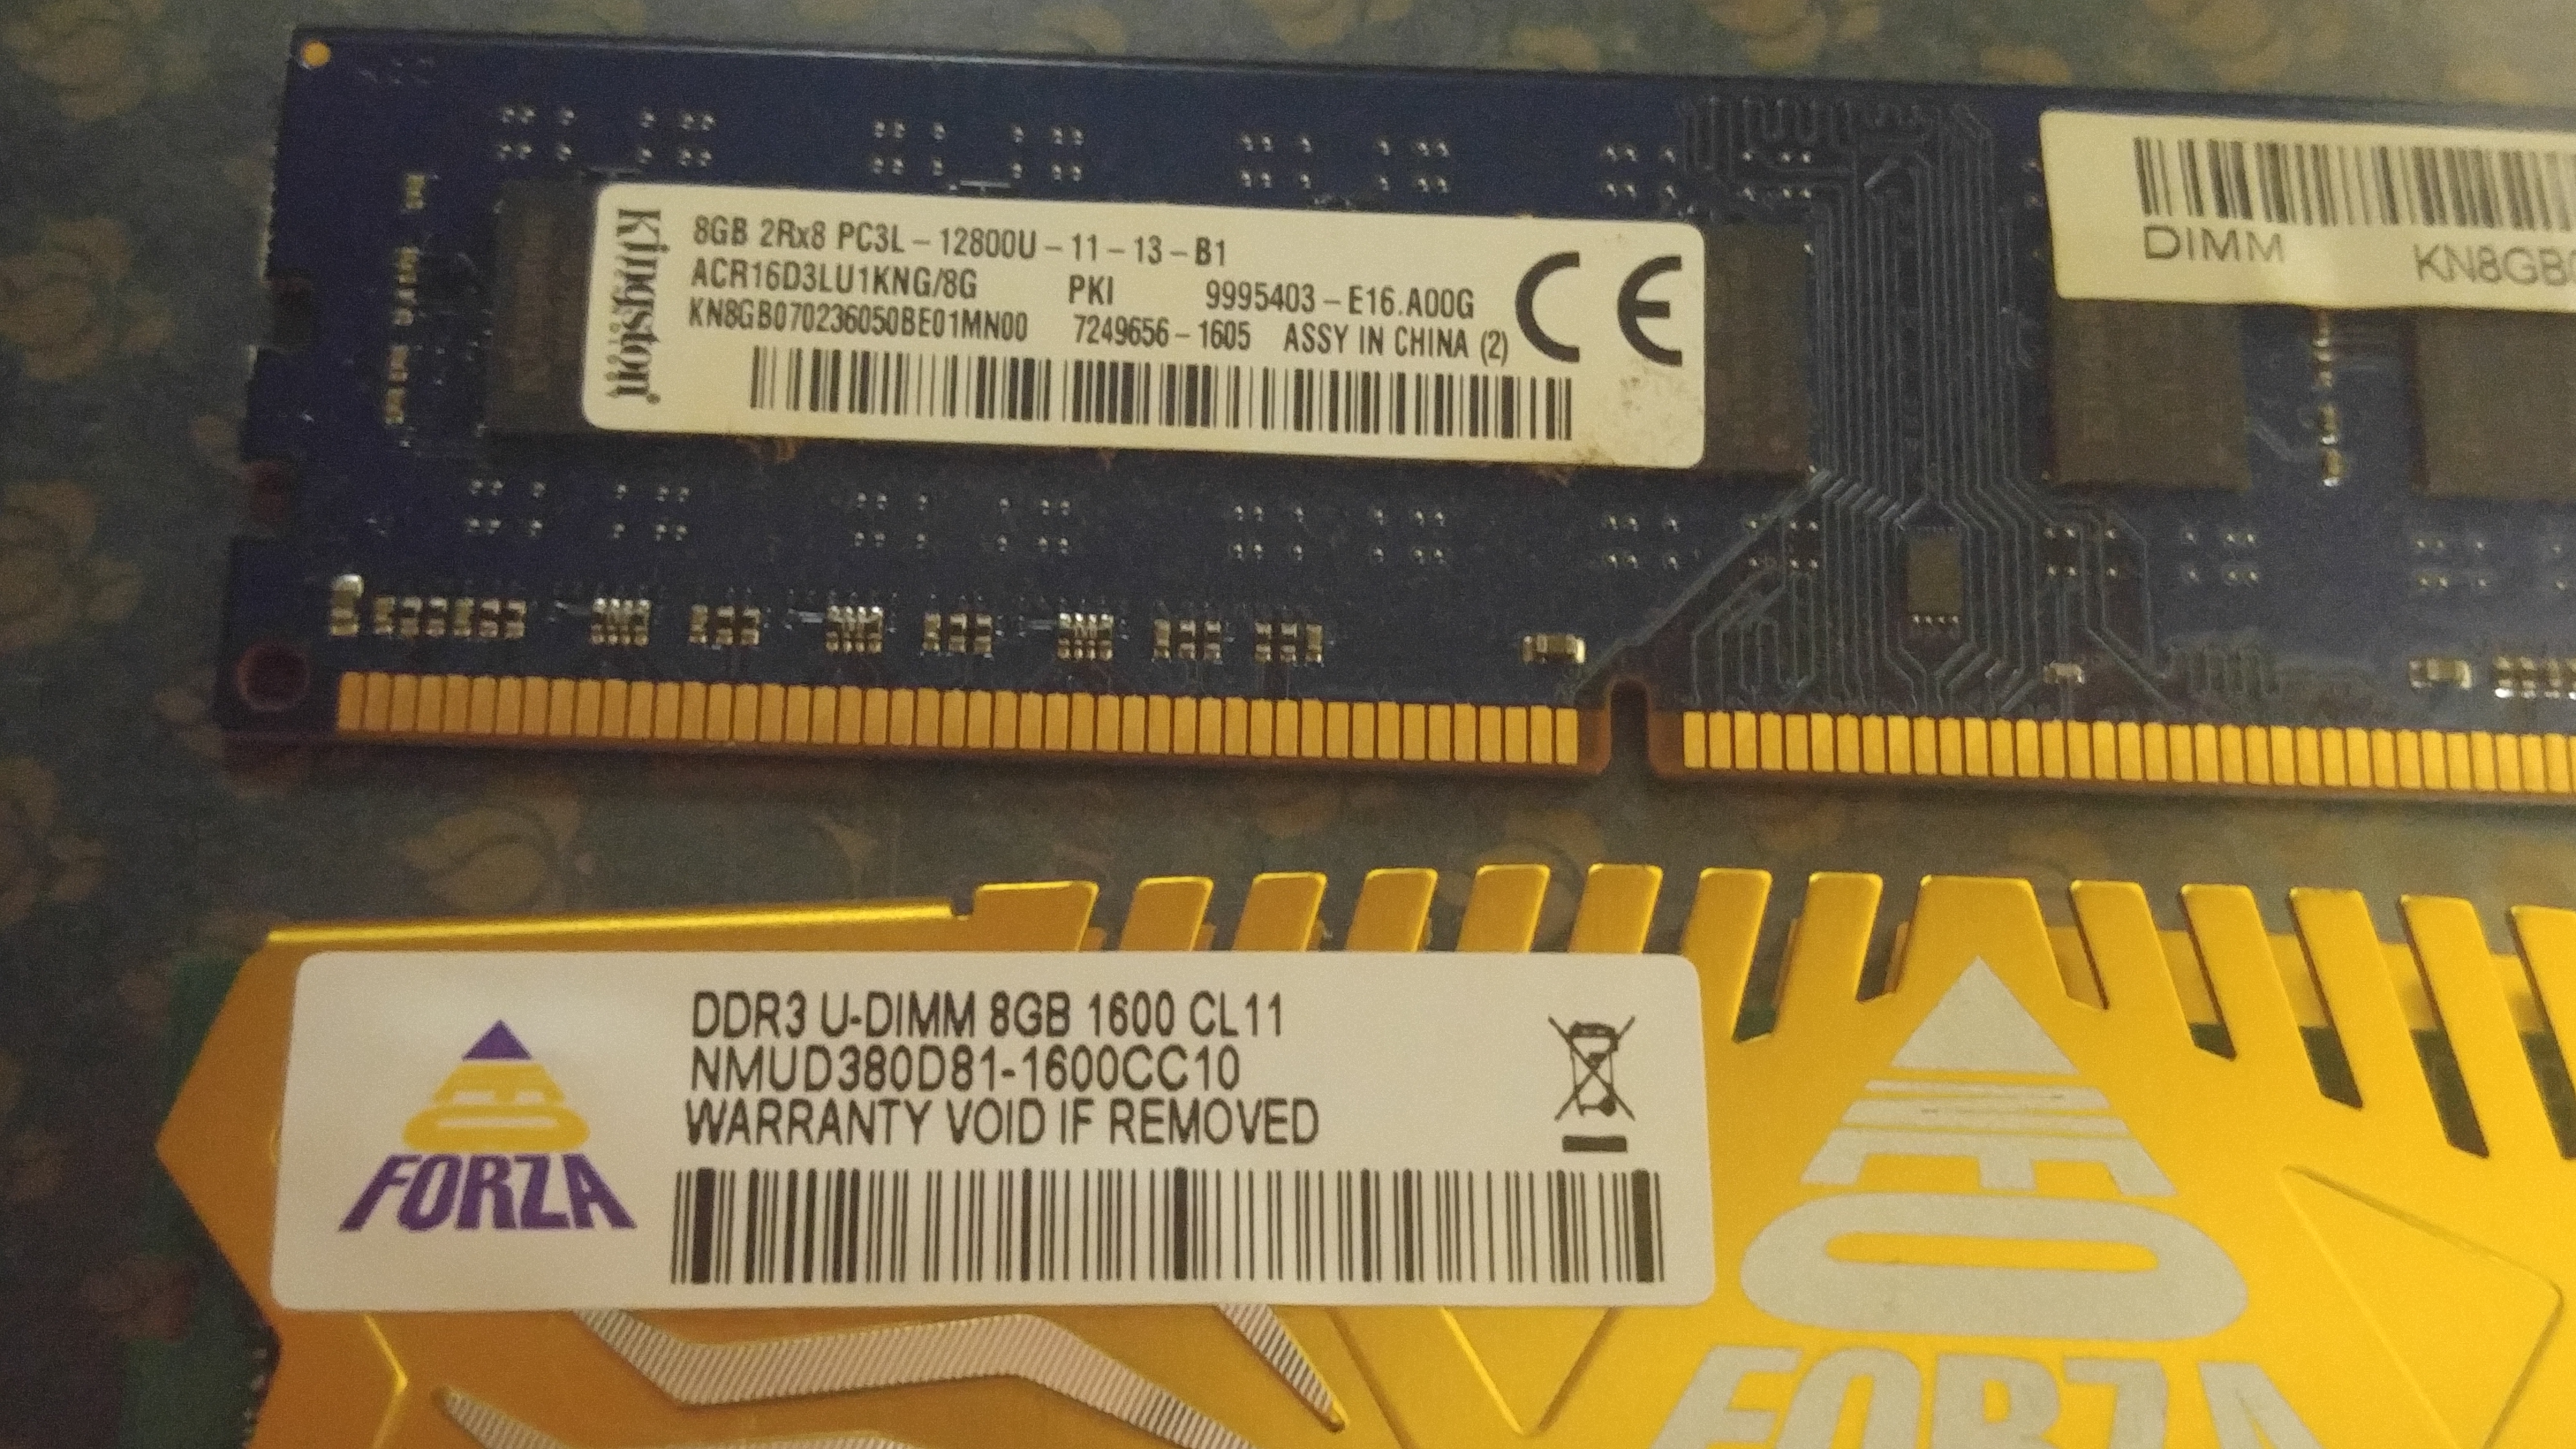 OFFTEK 4GB Replacement RAM Memory for AsRock Fatal1ty 970 Performance/3.1 Motherboard Memory DDR3-12800 - Non-ECC 